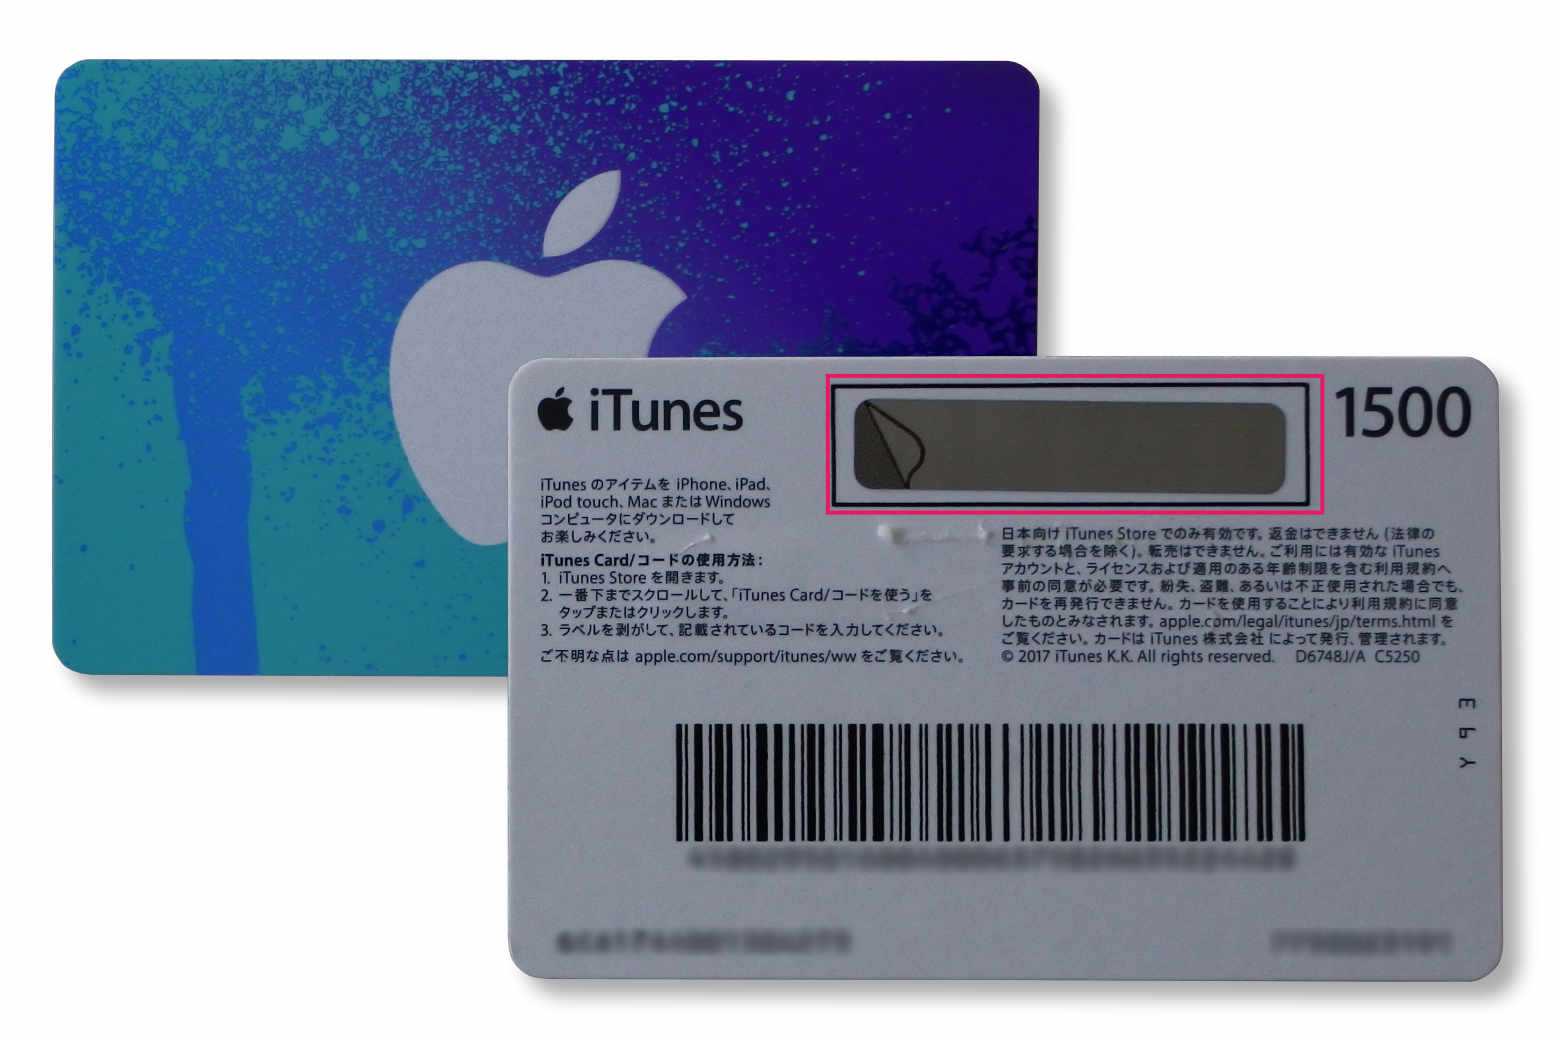 App Store＆iTunesギフトカード：iPadから音楽を購入して残額の確認をする【iPad】